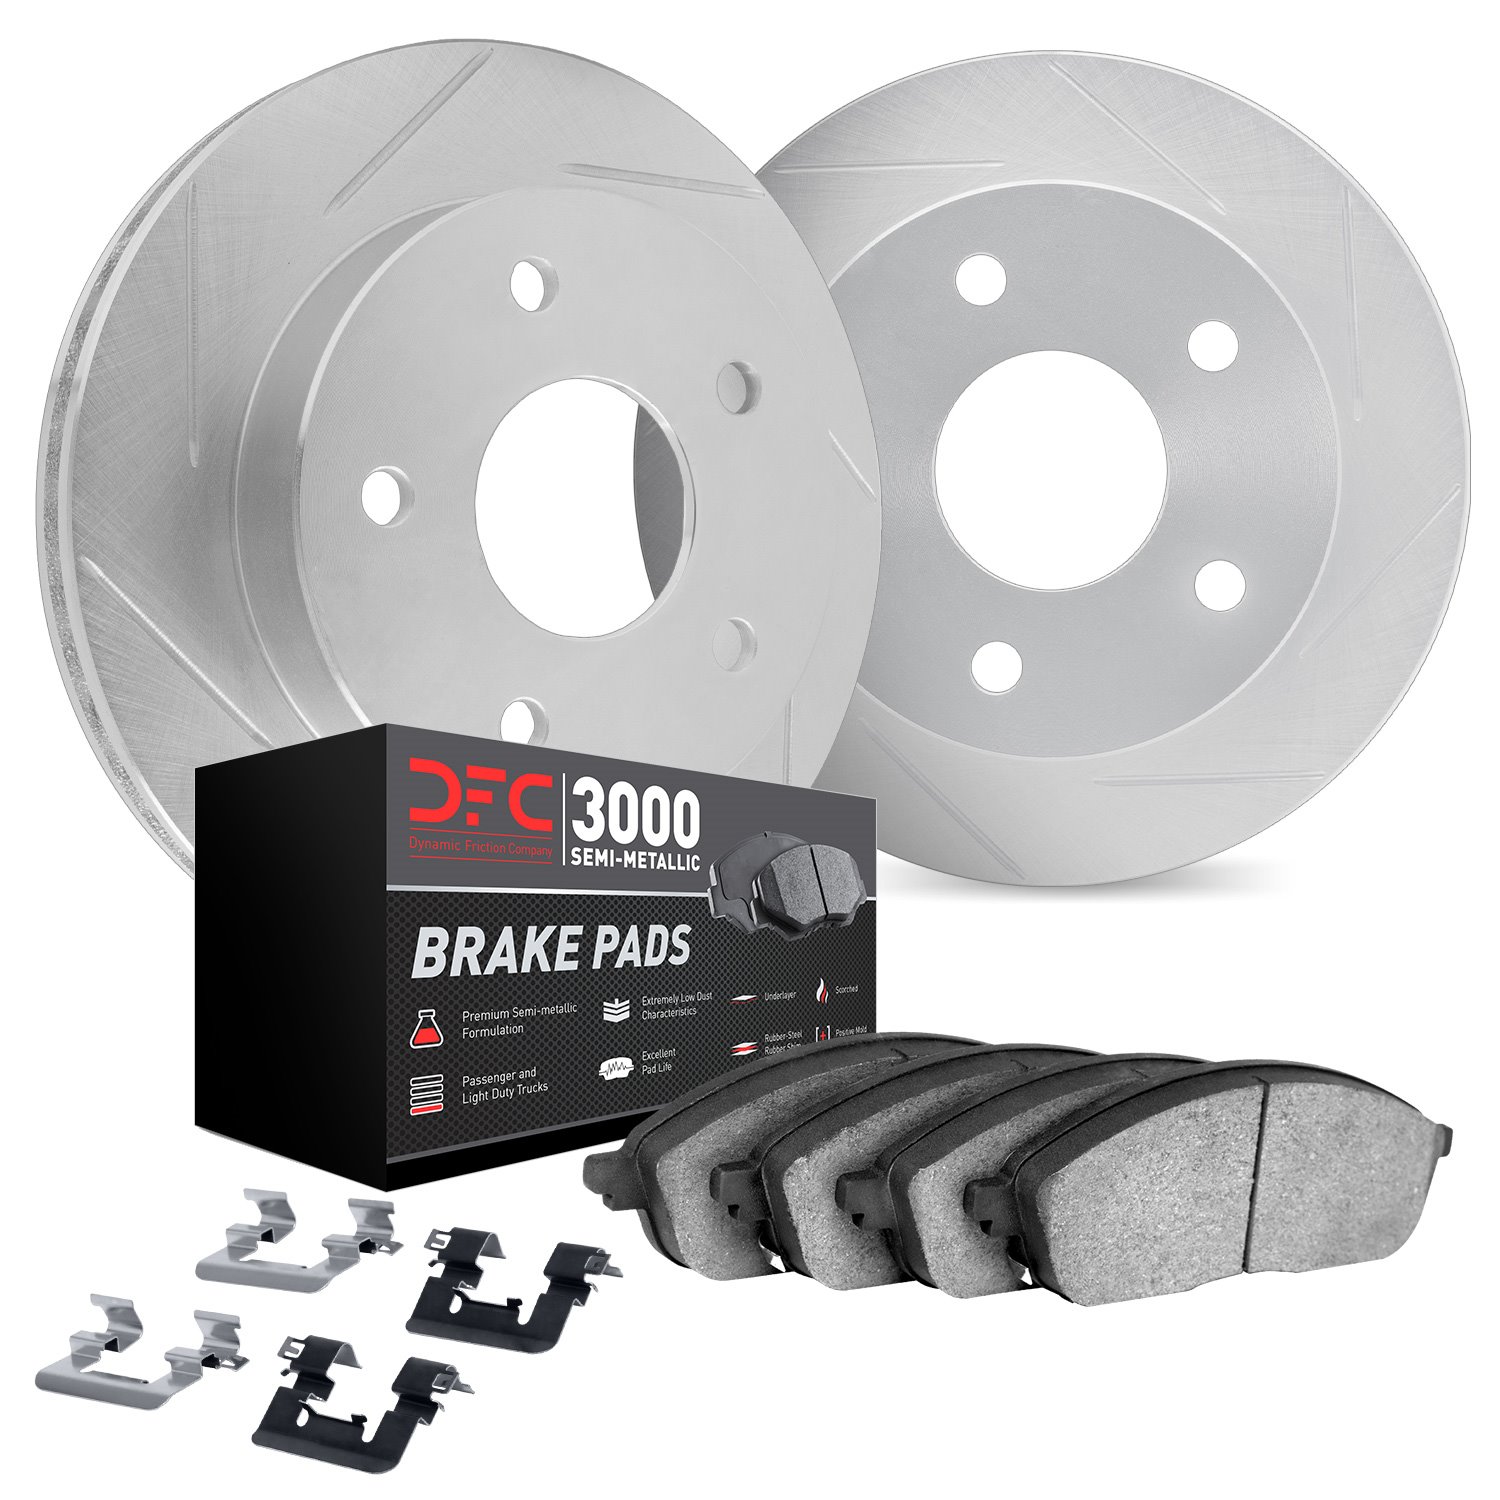 5112-59067 Slotted Brake Rotors with 3000-Series Semi-Metallic Brake Pads Kit & Hardware [Silver], 2005-2015 Acura/Honda, Positi